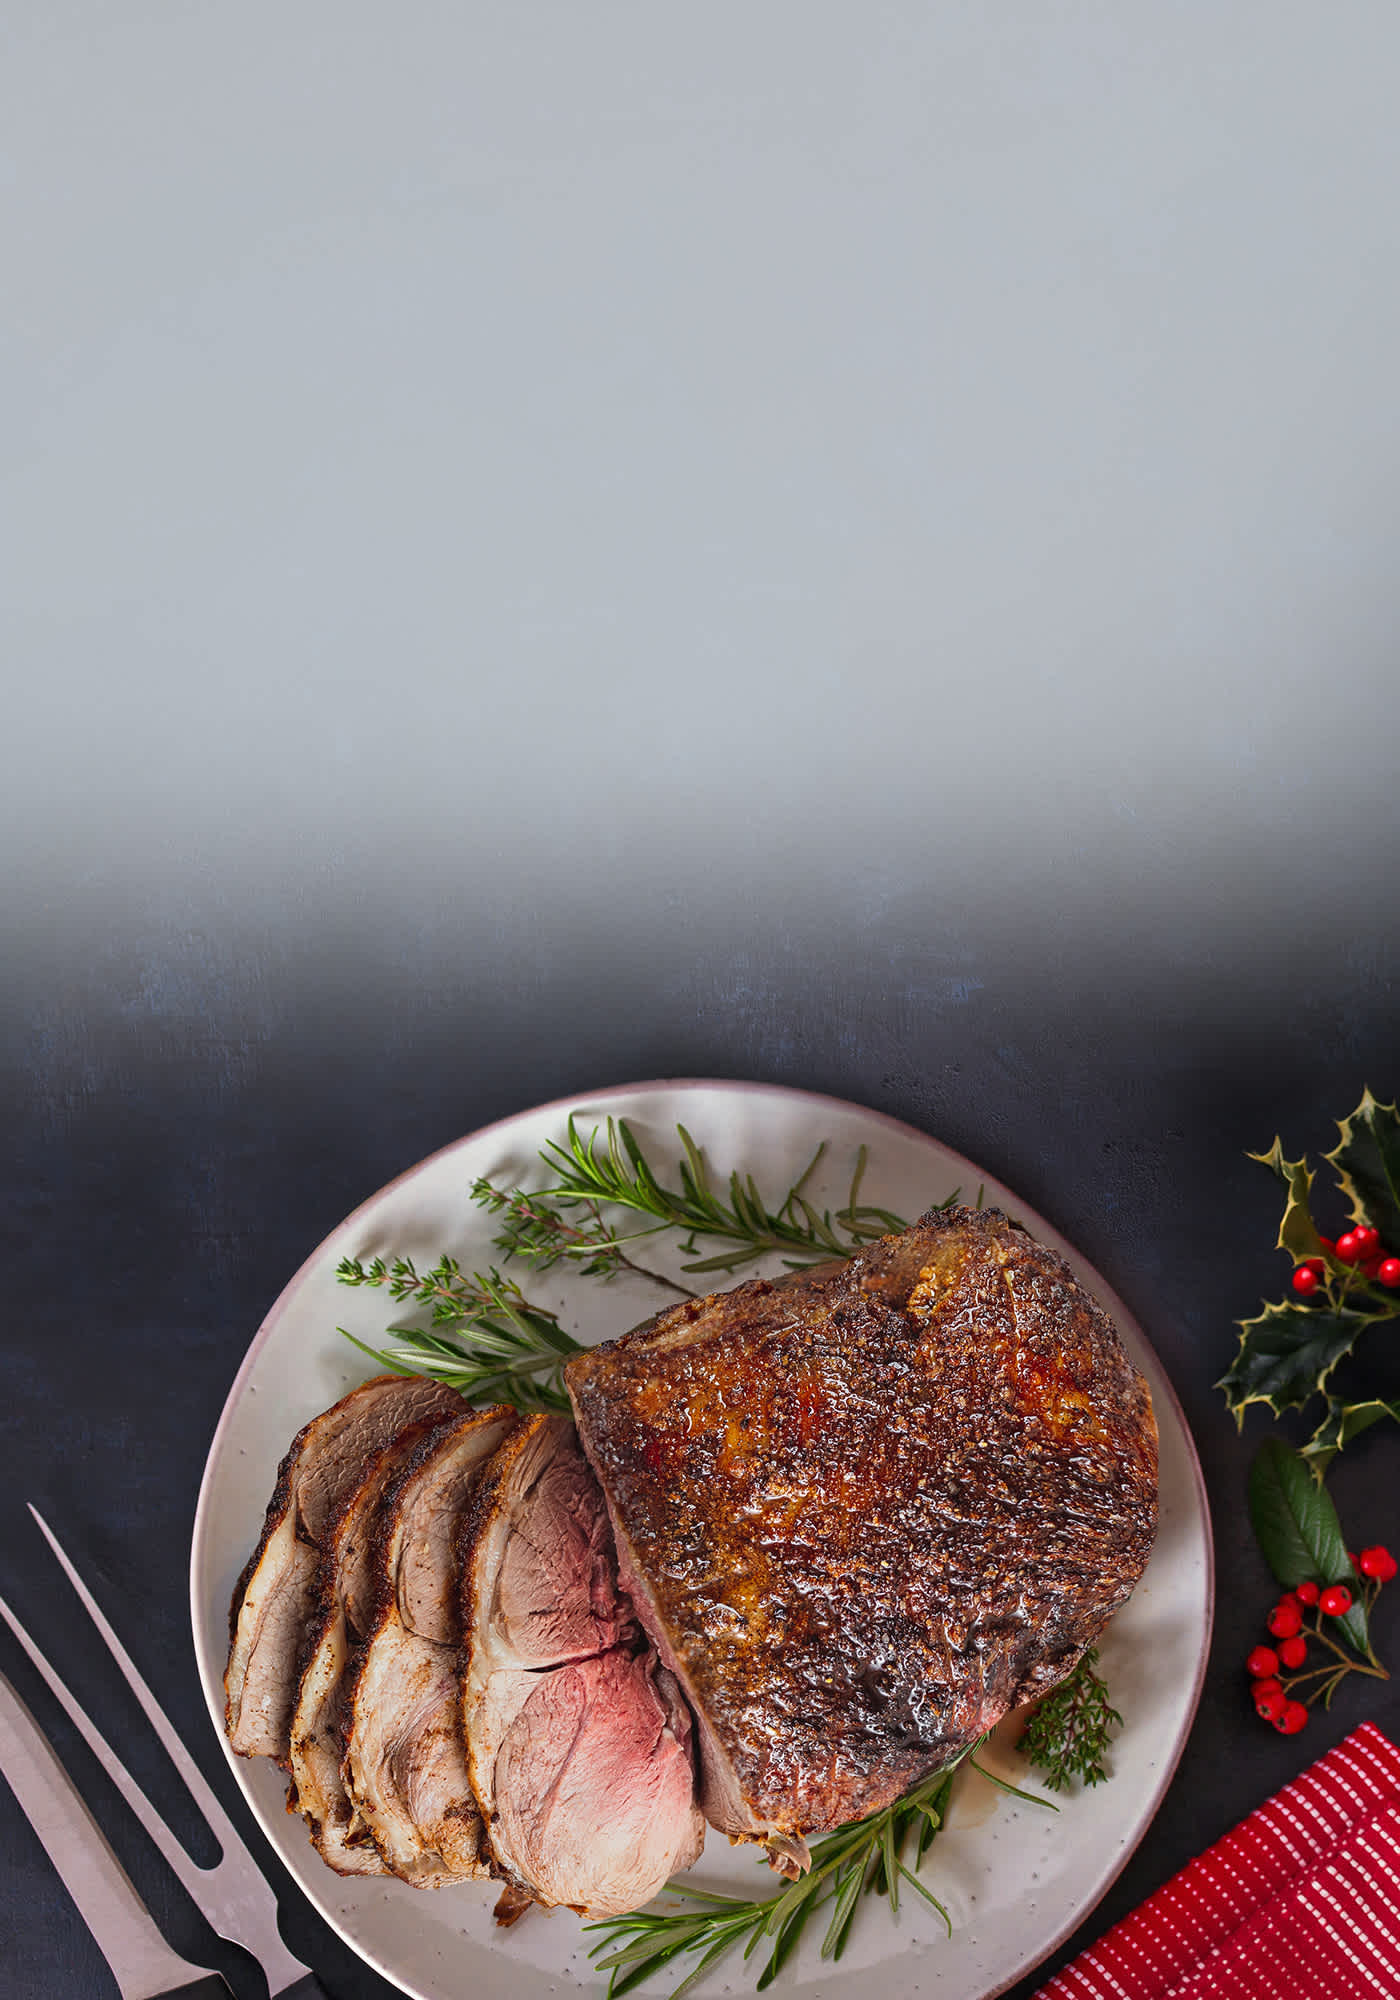  A holiday roast on a festive plate with a blue background.